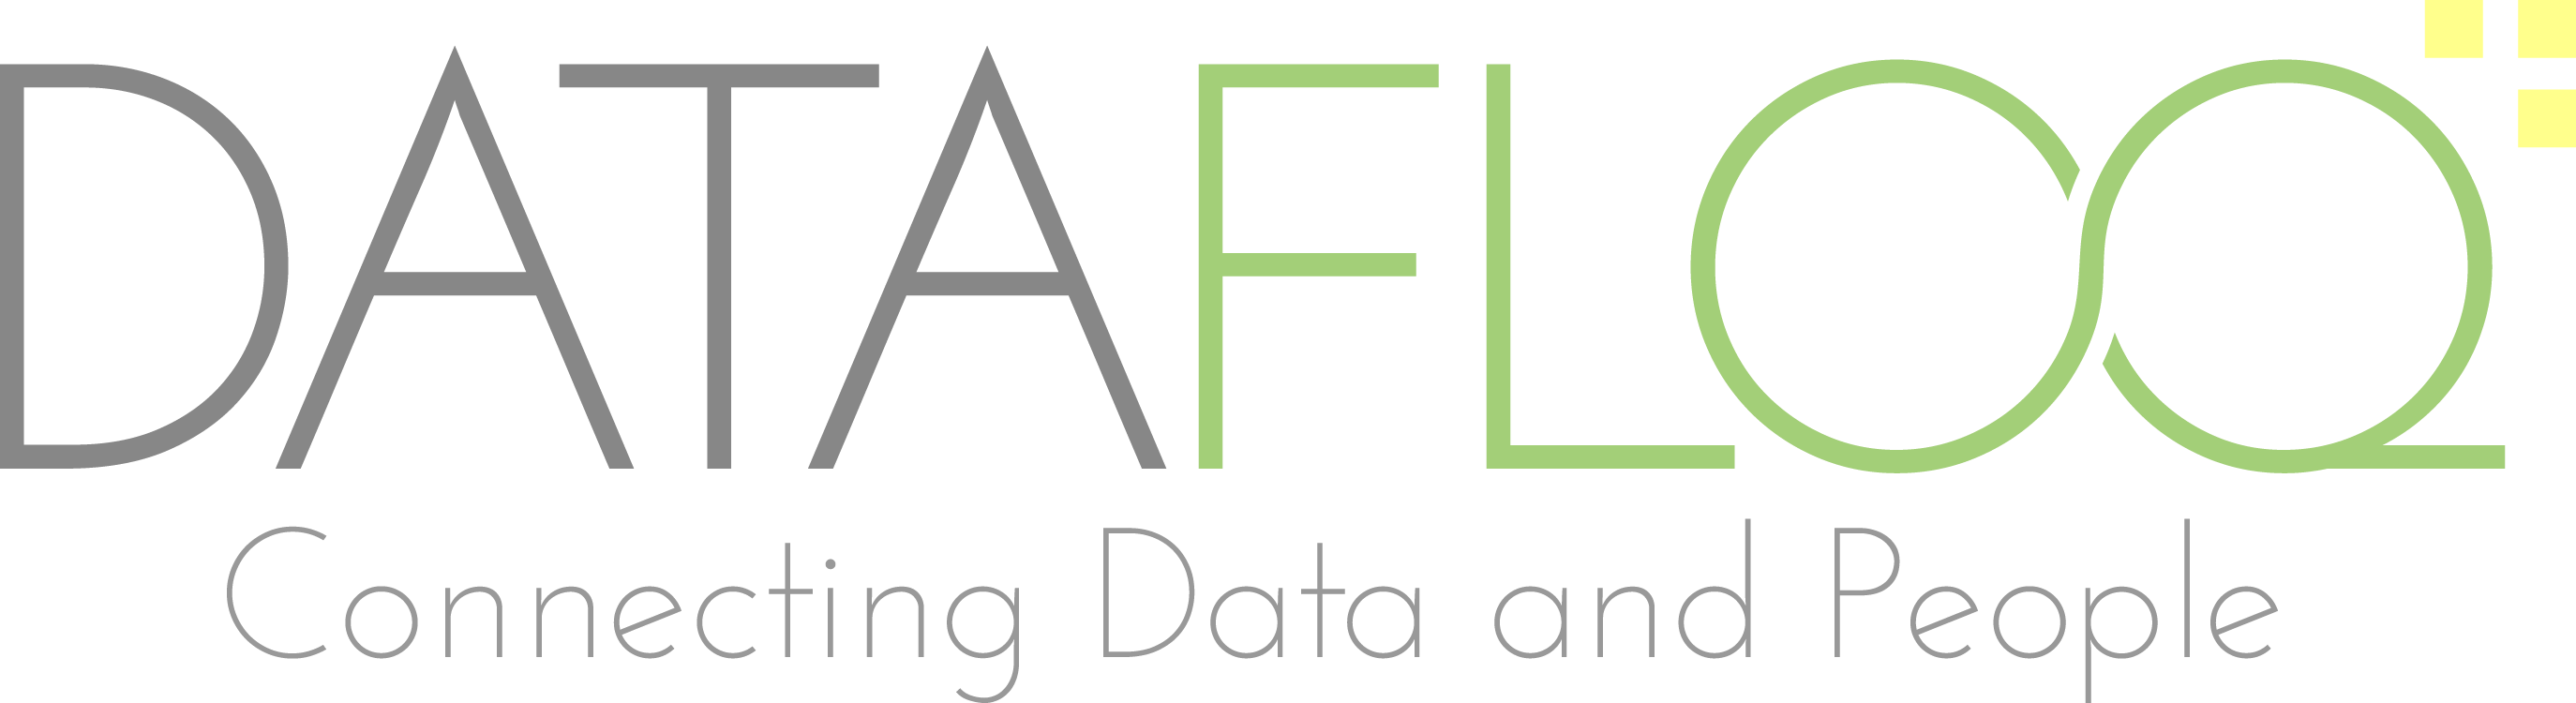 Datafloq logo